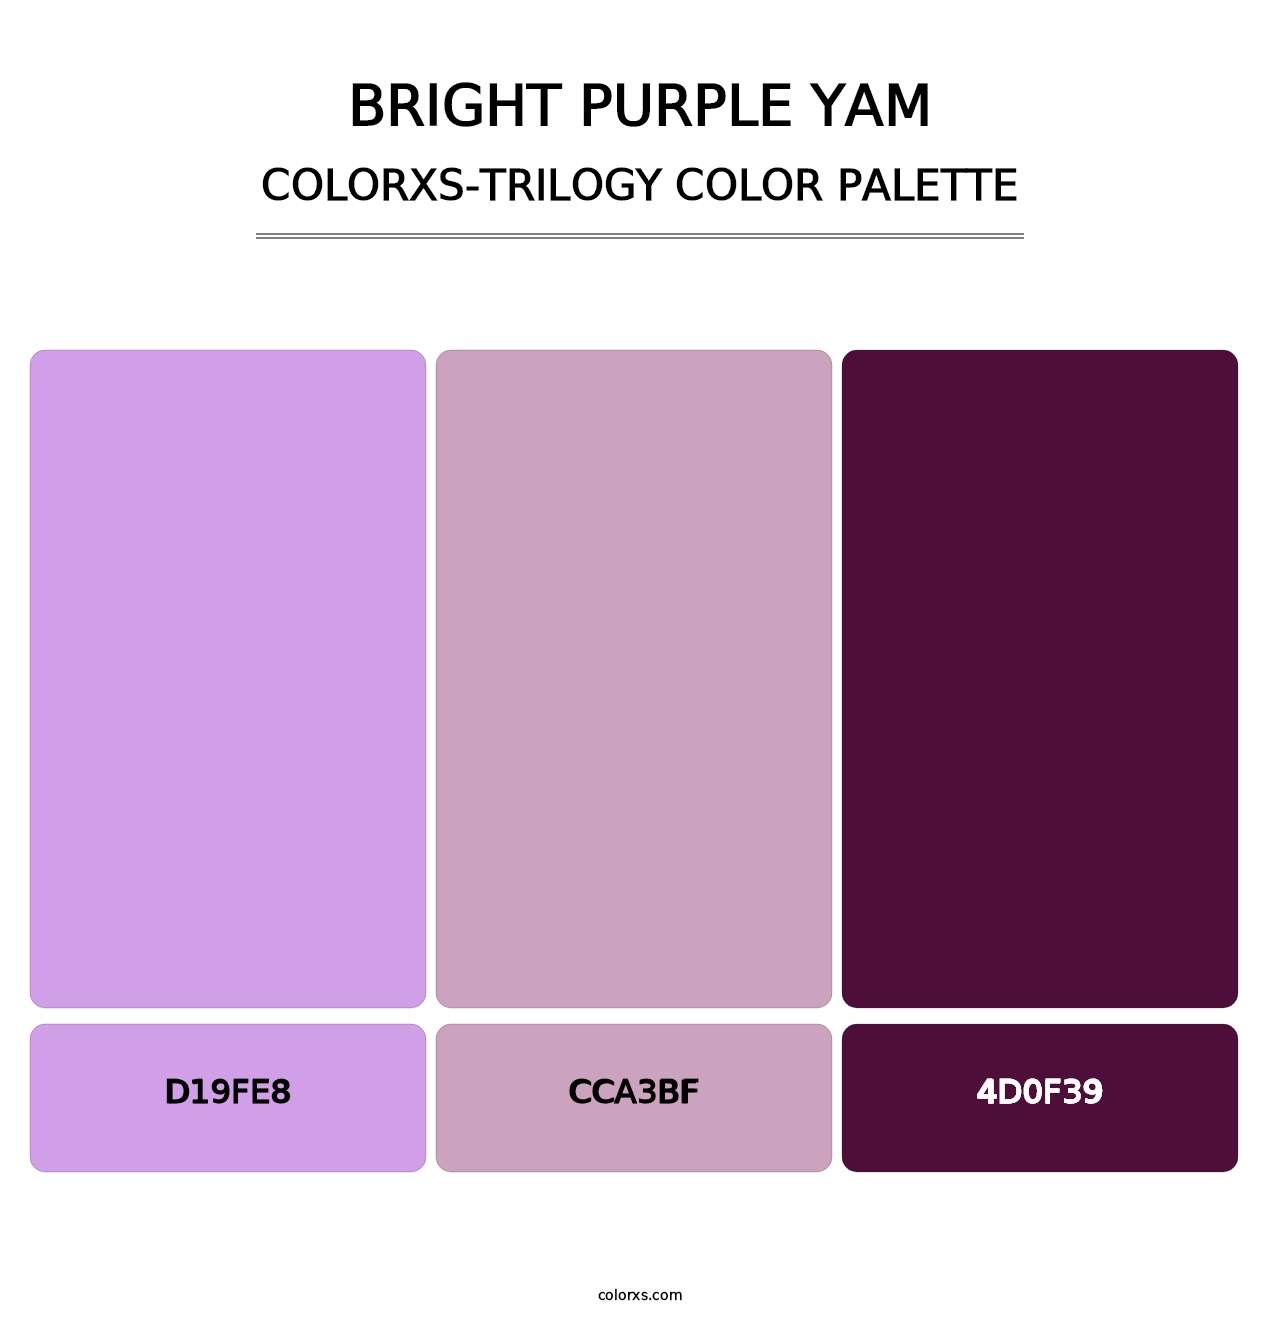 Bright Purple Yam - Colorxs Trilogy Palette